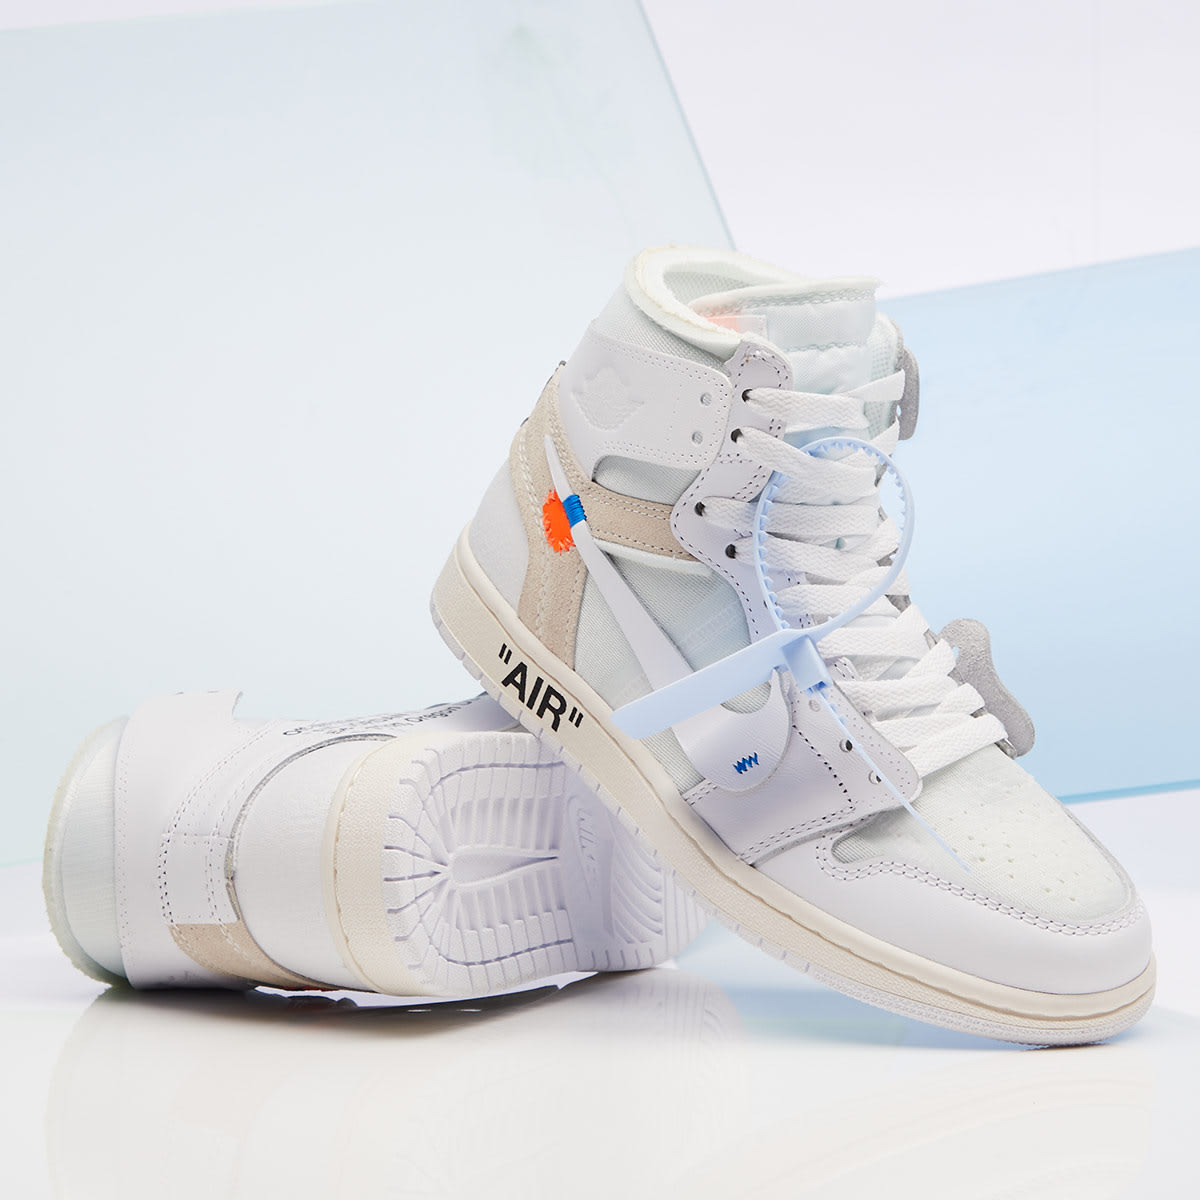 OFF-WHITE x Air Jordan 1 White Set To Drop Next Year •